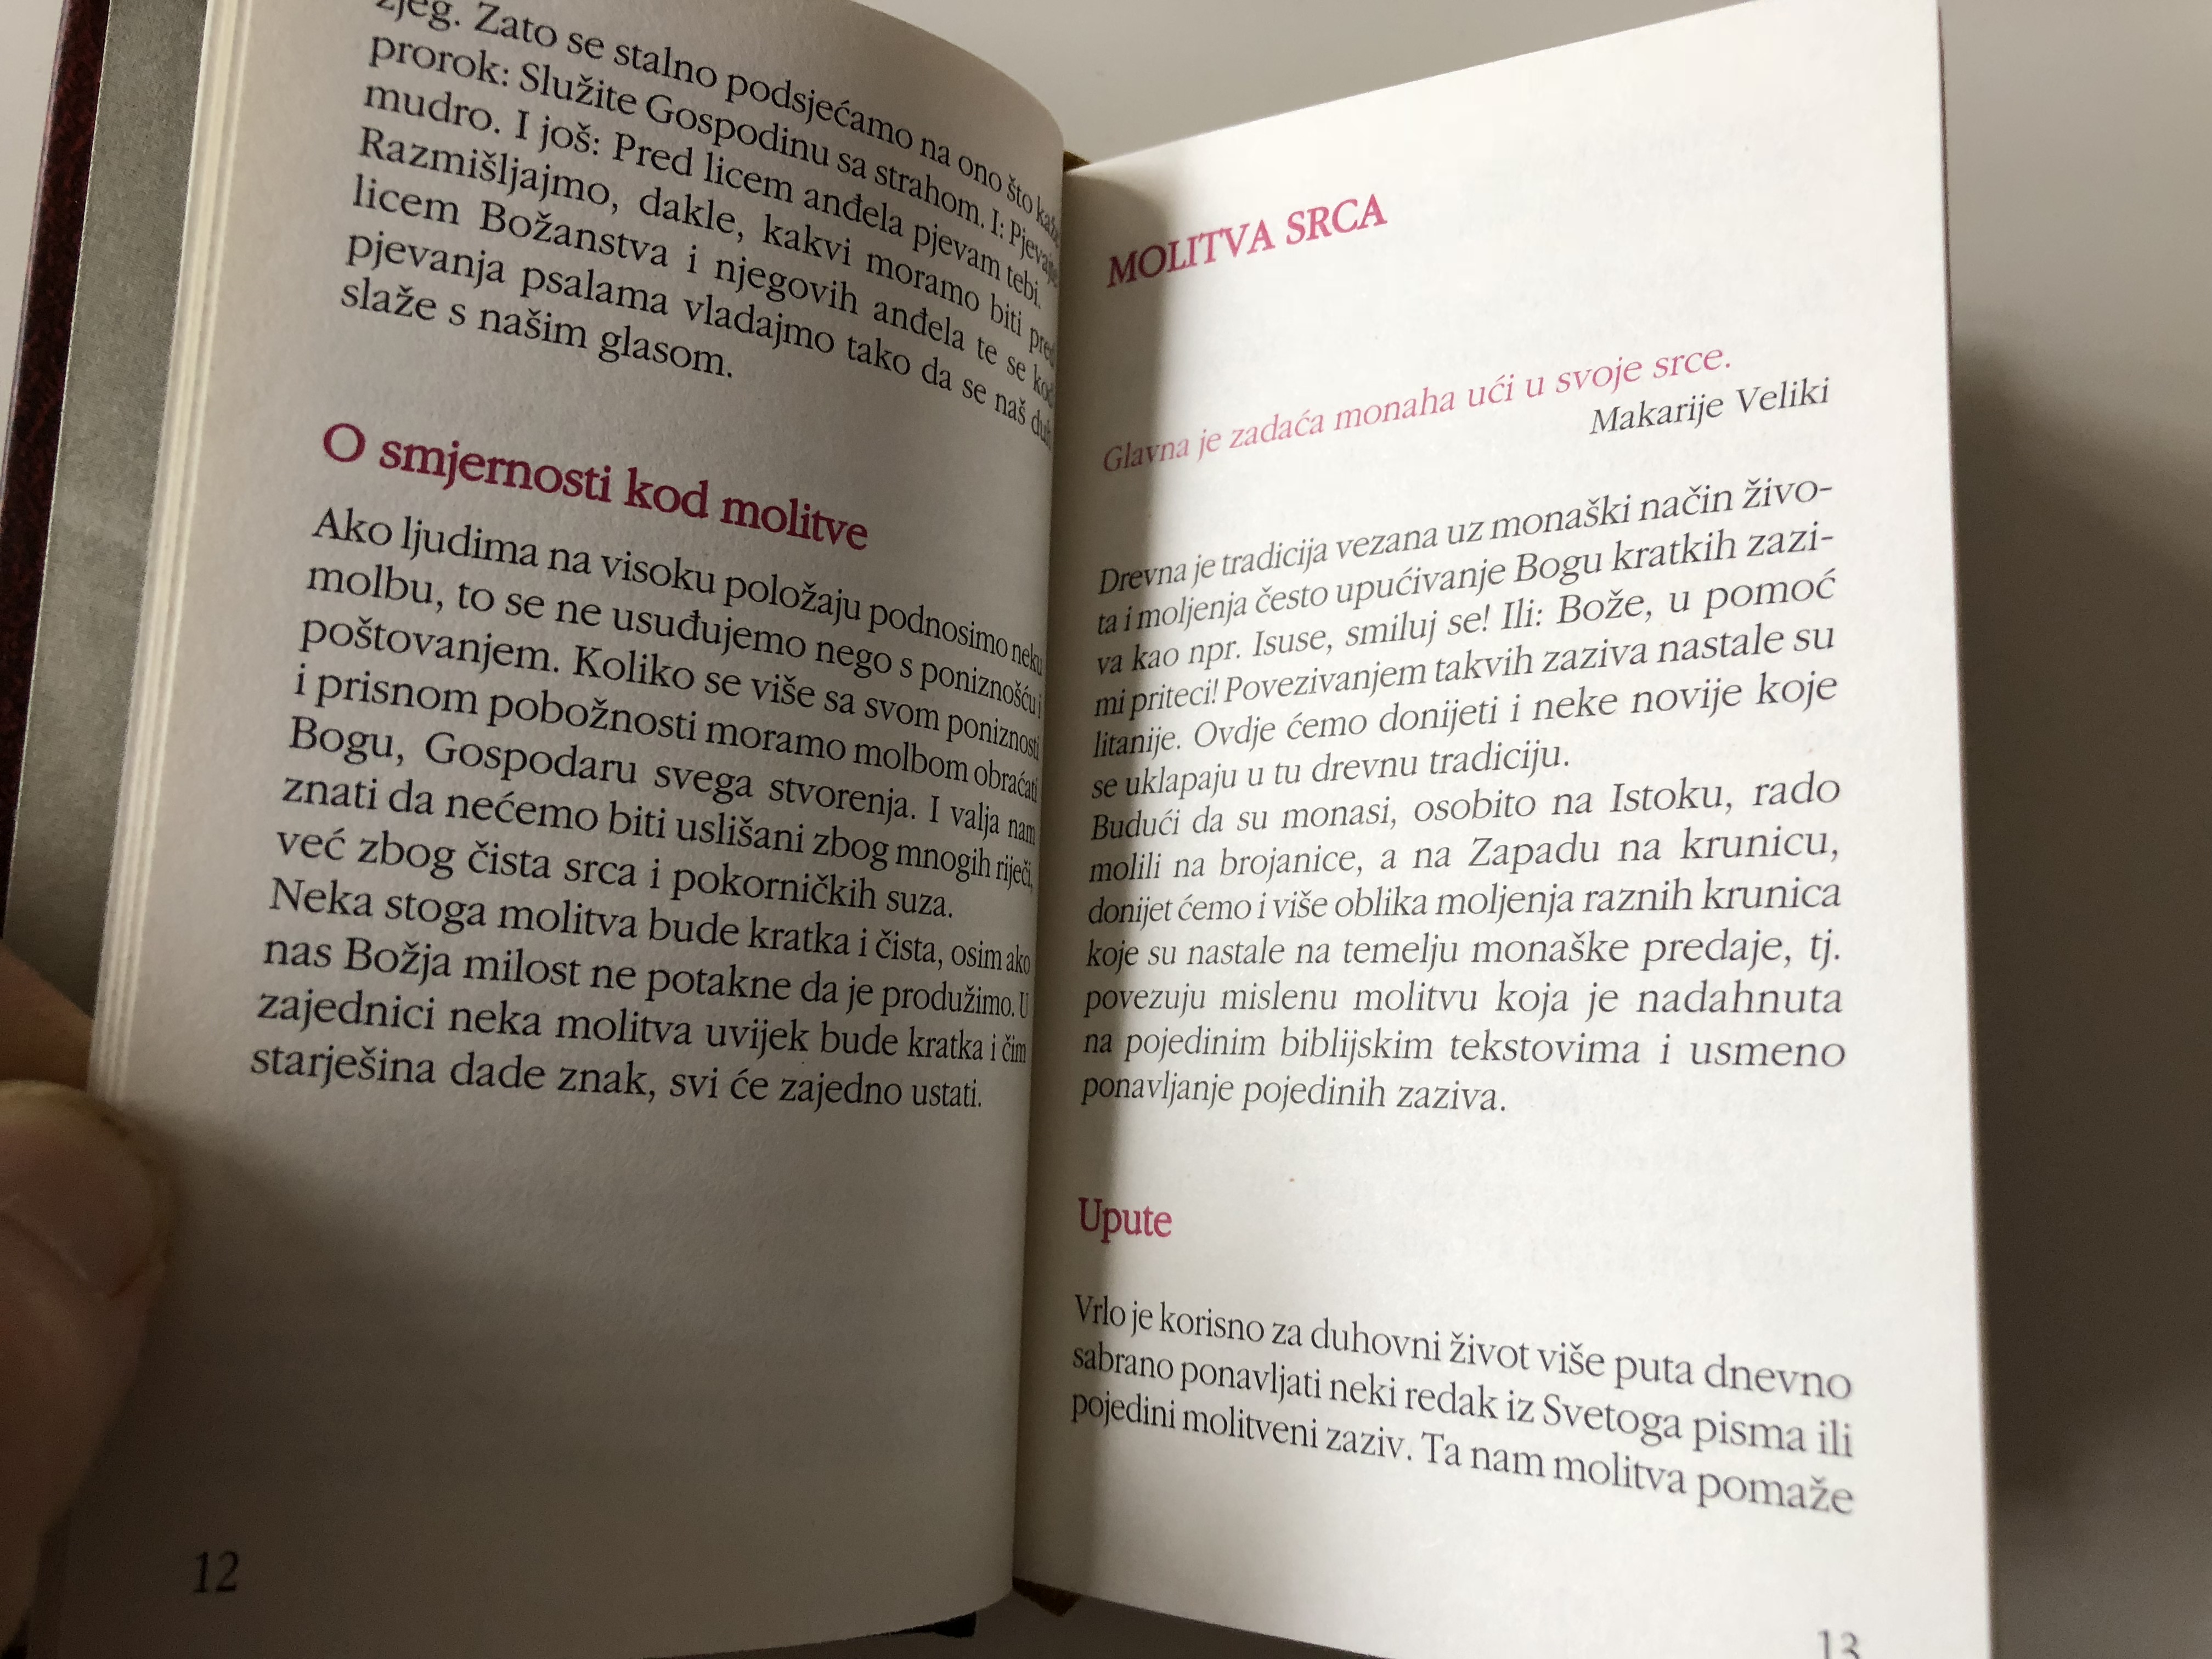 croatian-benedictine-prayerbook-5th-edition-2018-6-.jpg